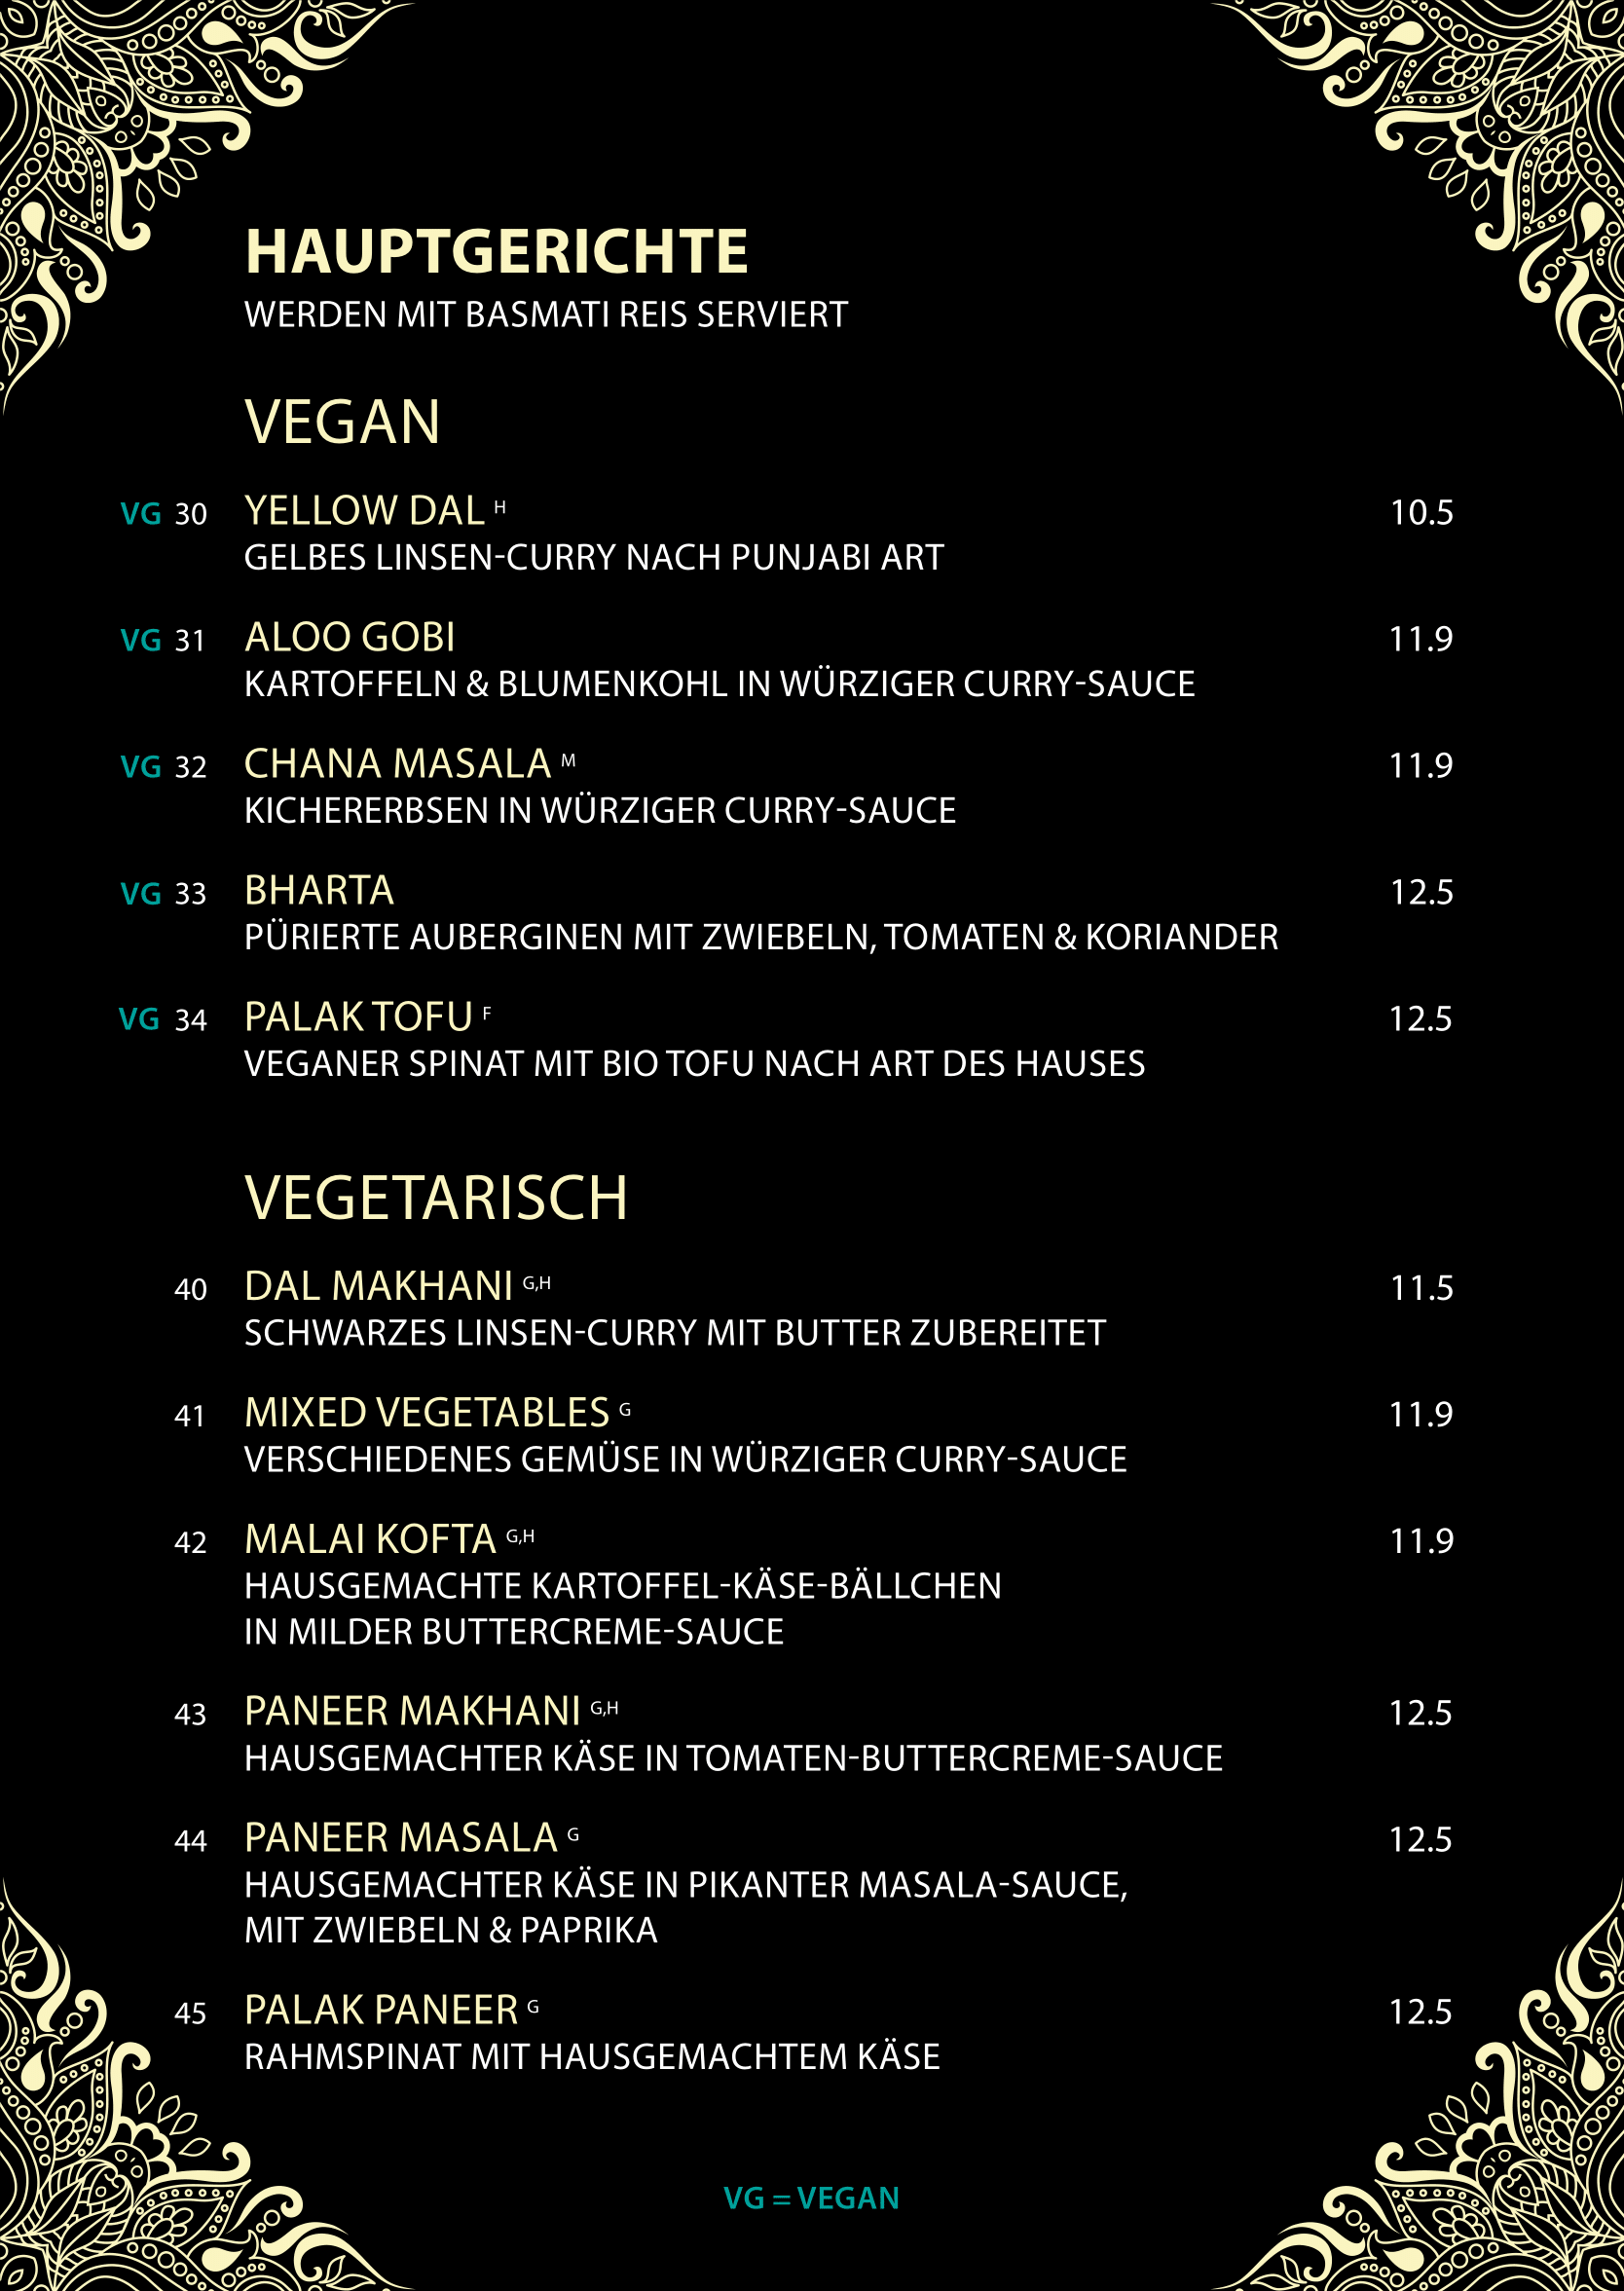 Rasmalai Speisekarte - Vegan & Vegetarisch